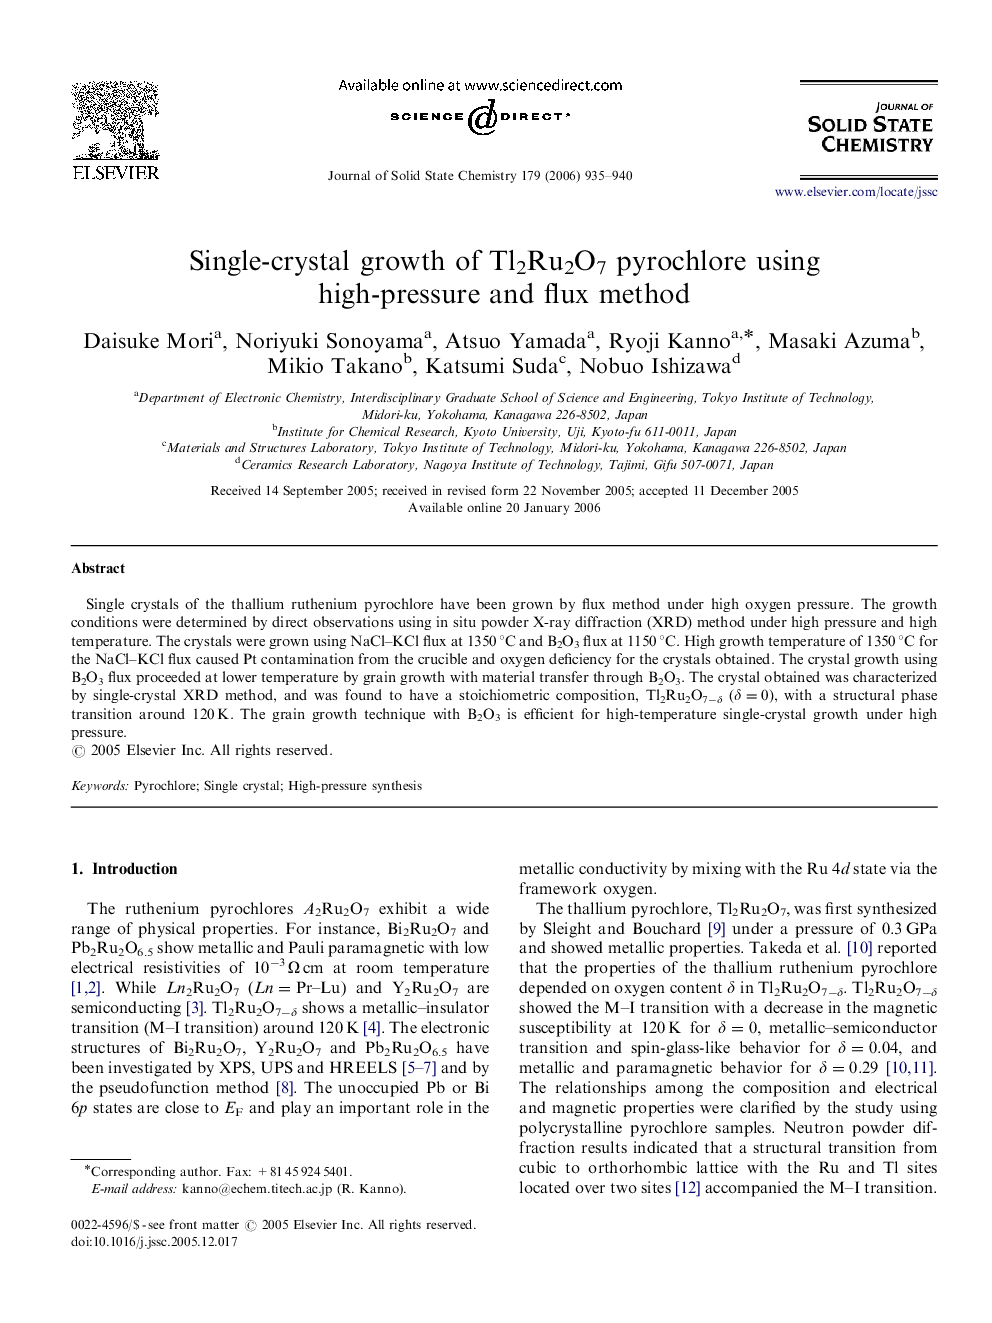 Single-crystal growth of Tl2Ru2O7 pyrochlore using high-pressure and flux method